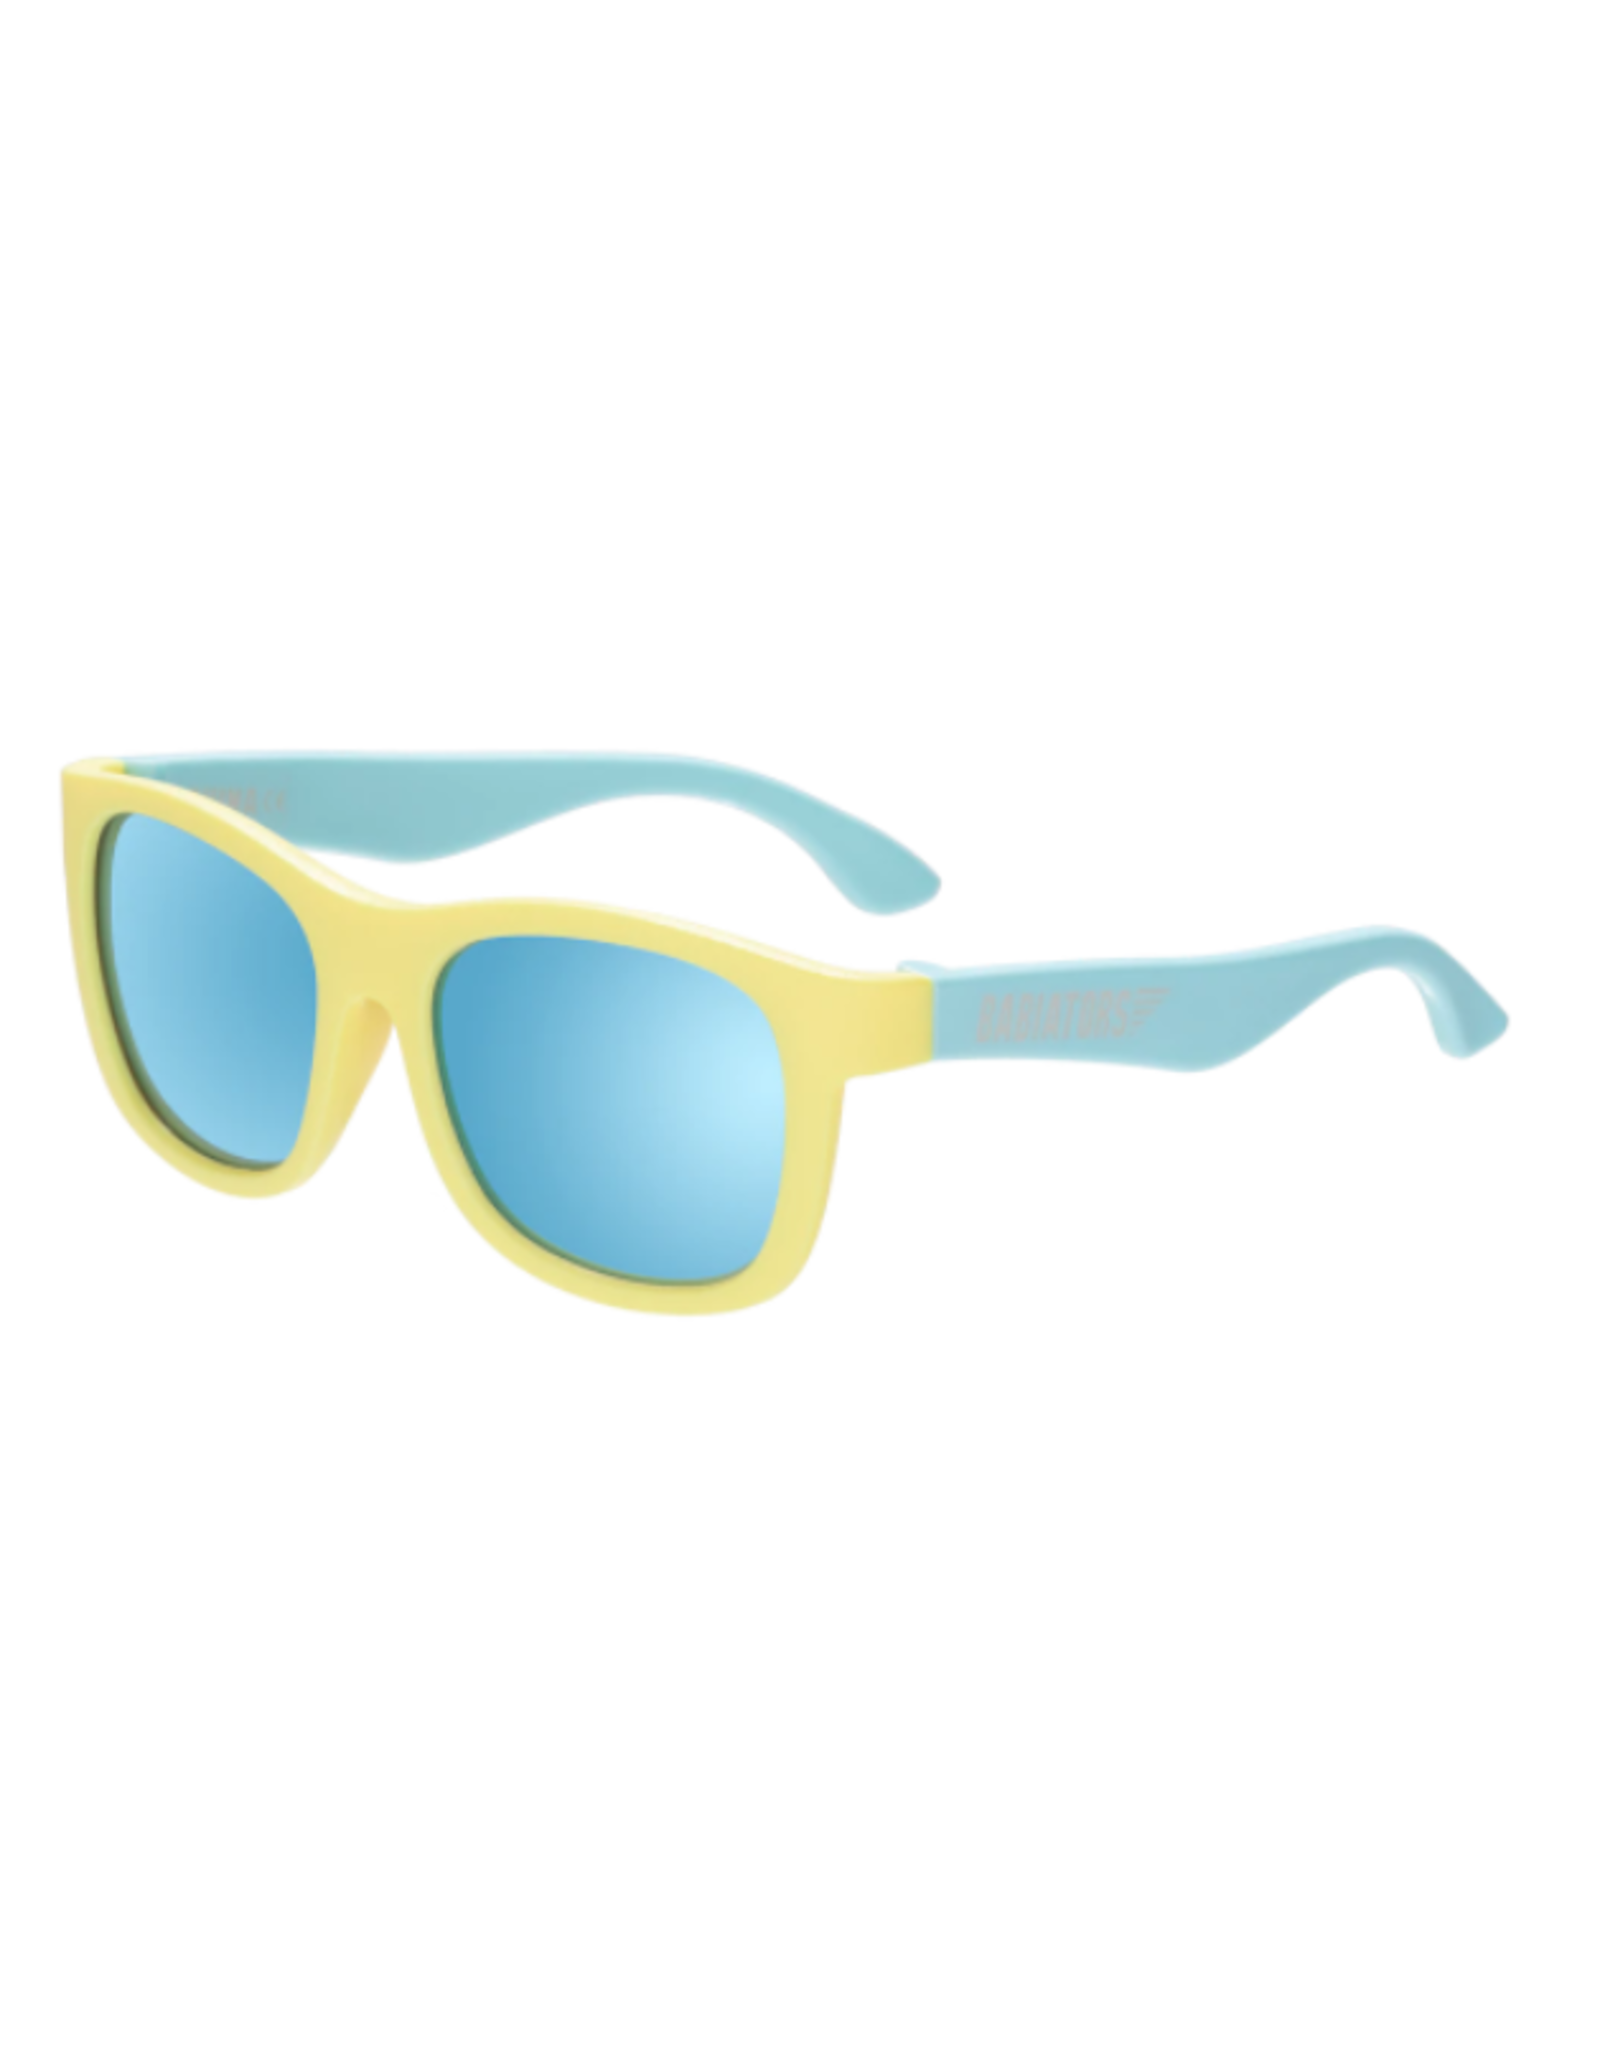 Babiators Navigator Sunglasses Limited